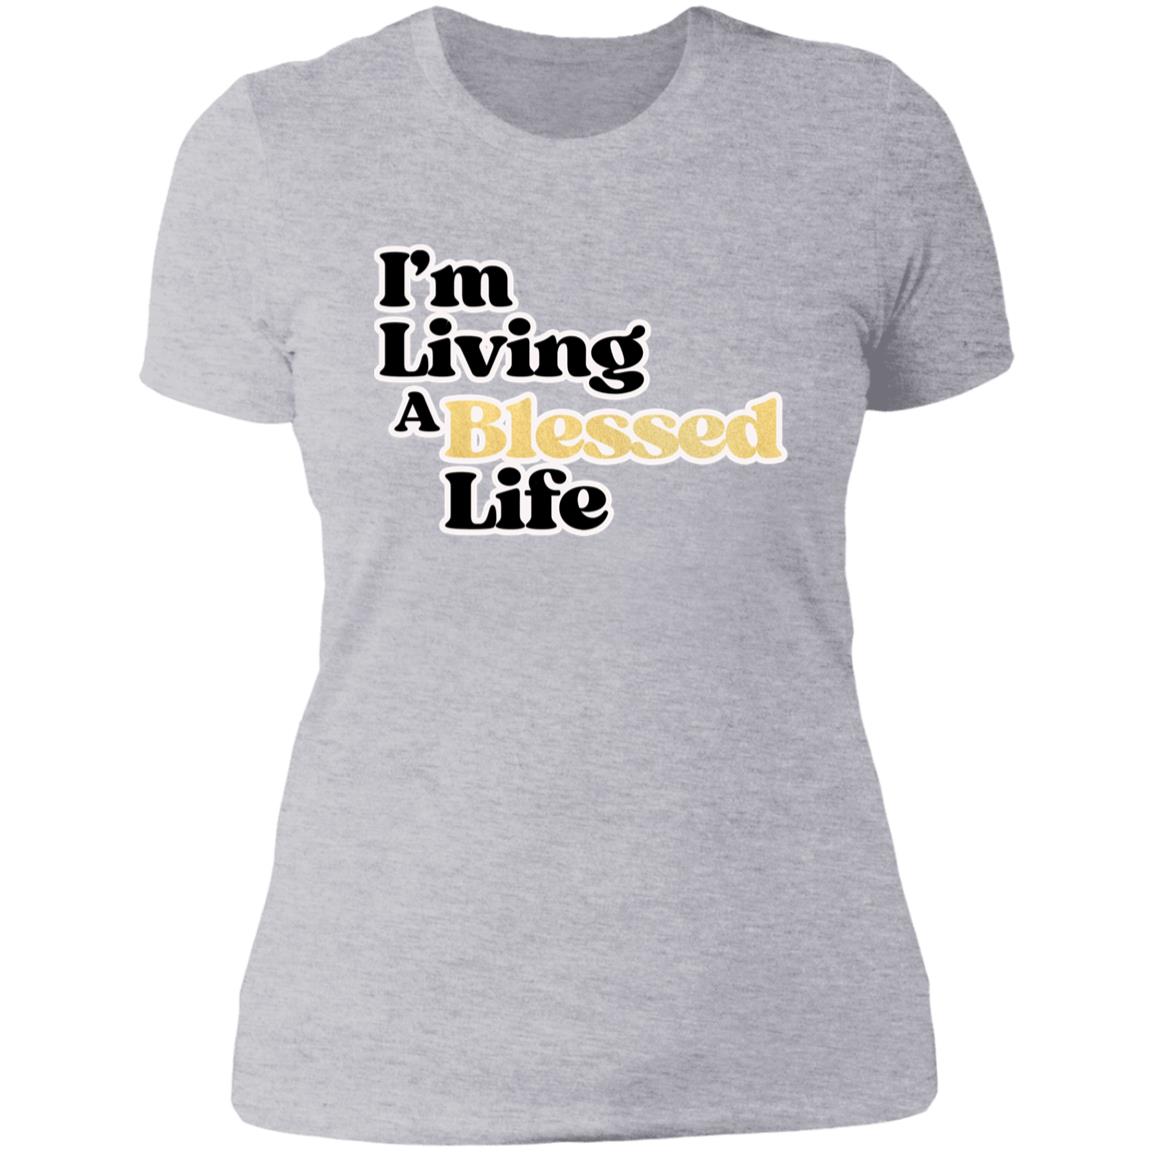 Living A Blessed Life 4.3 oz Ladies' T-shirt